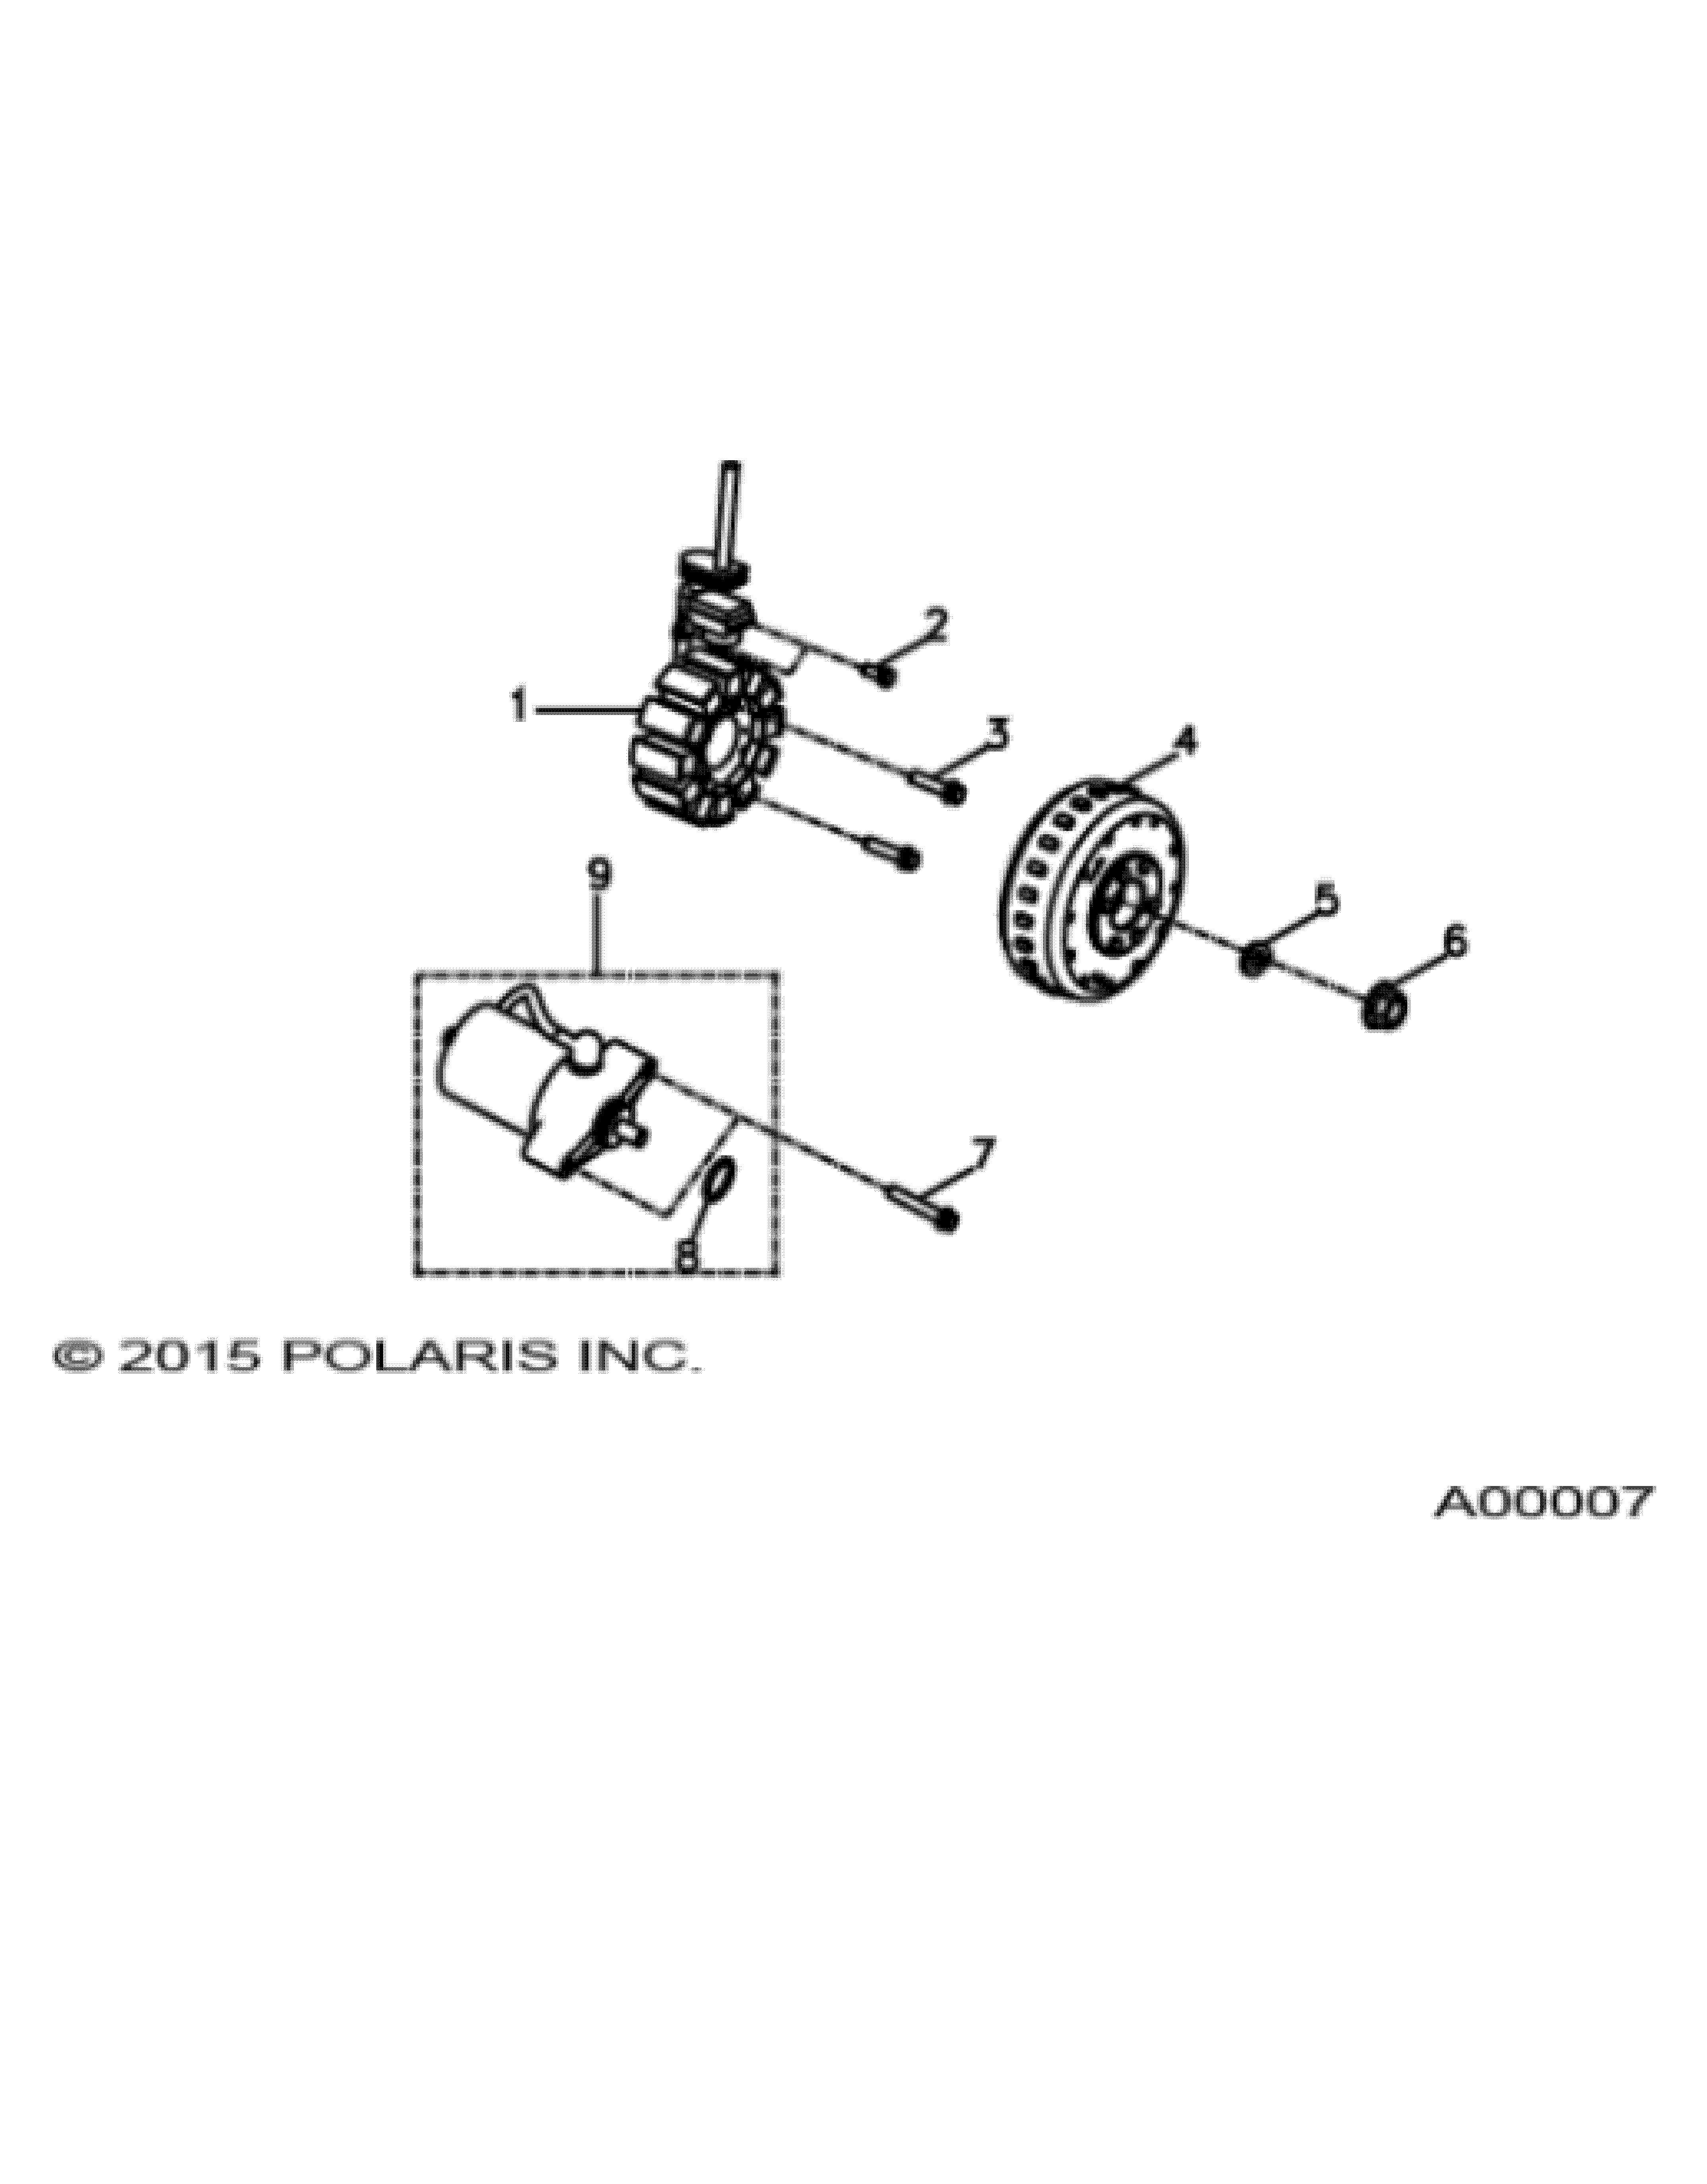 ENGINE STATOR and STARTING MOTOR - A18YAF11B5 / N5 (A00007)